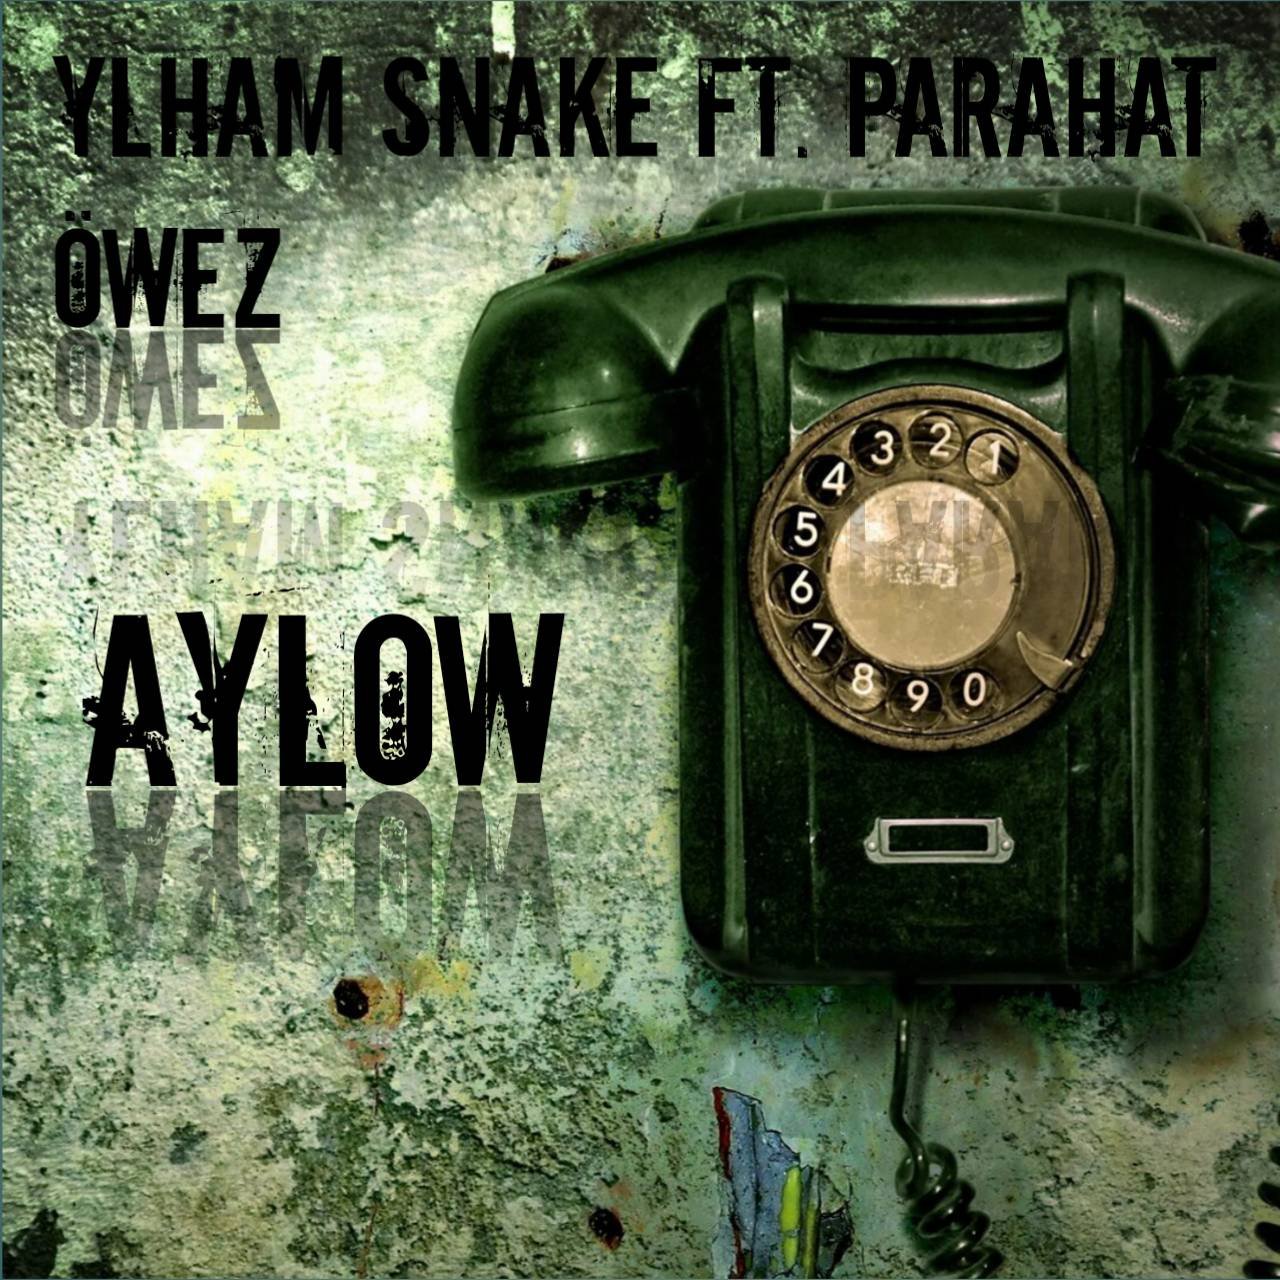 Ylham Snake ft. Parahat Owez - Aylow [taze single] official audio